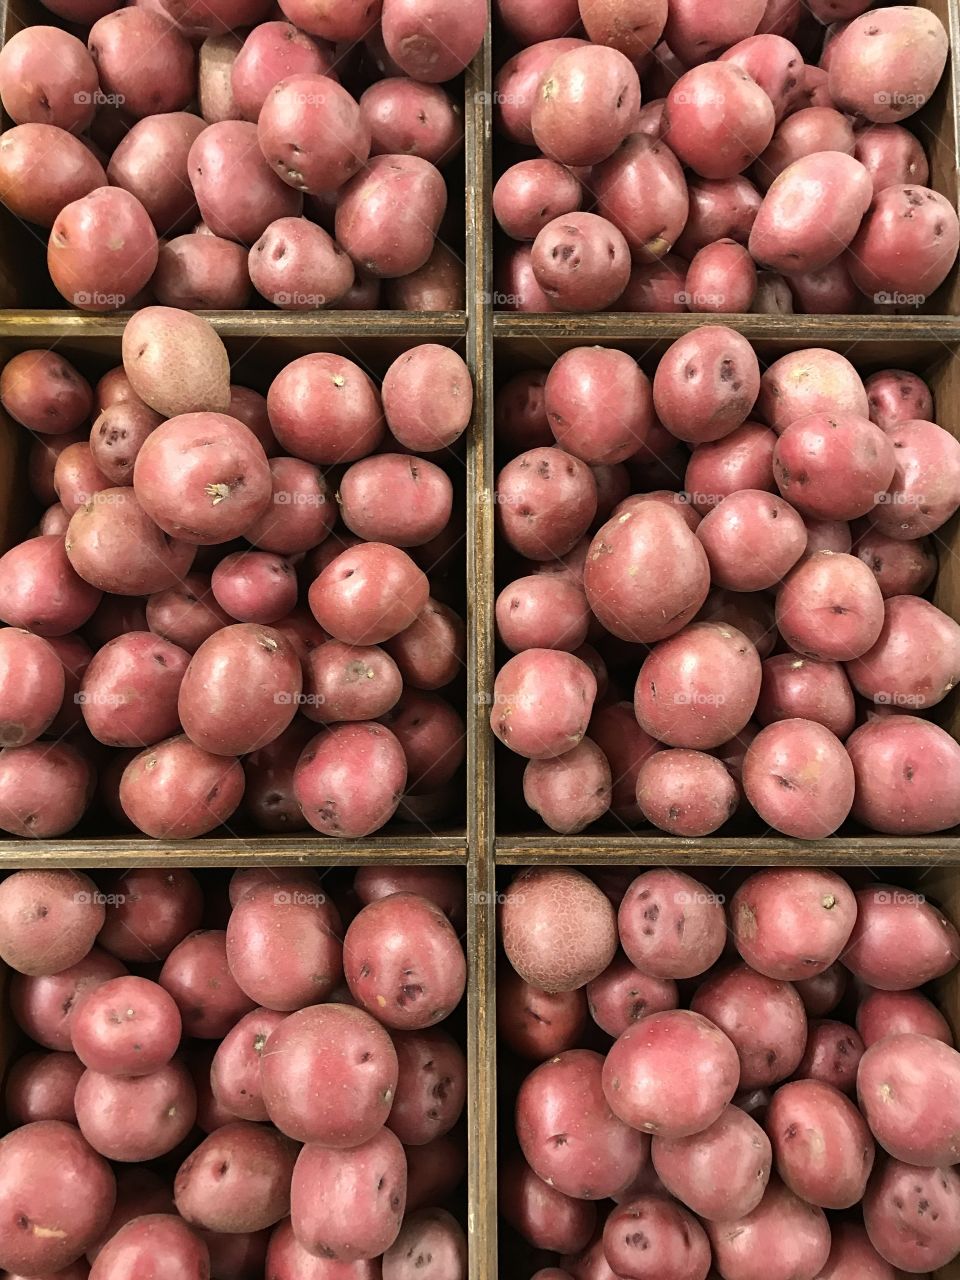 Red potatoes in shelf